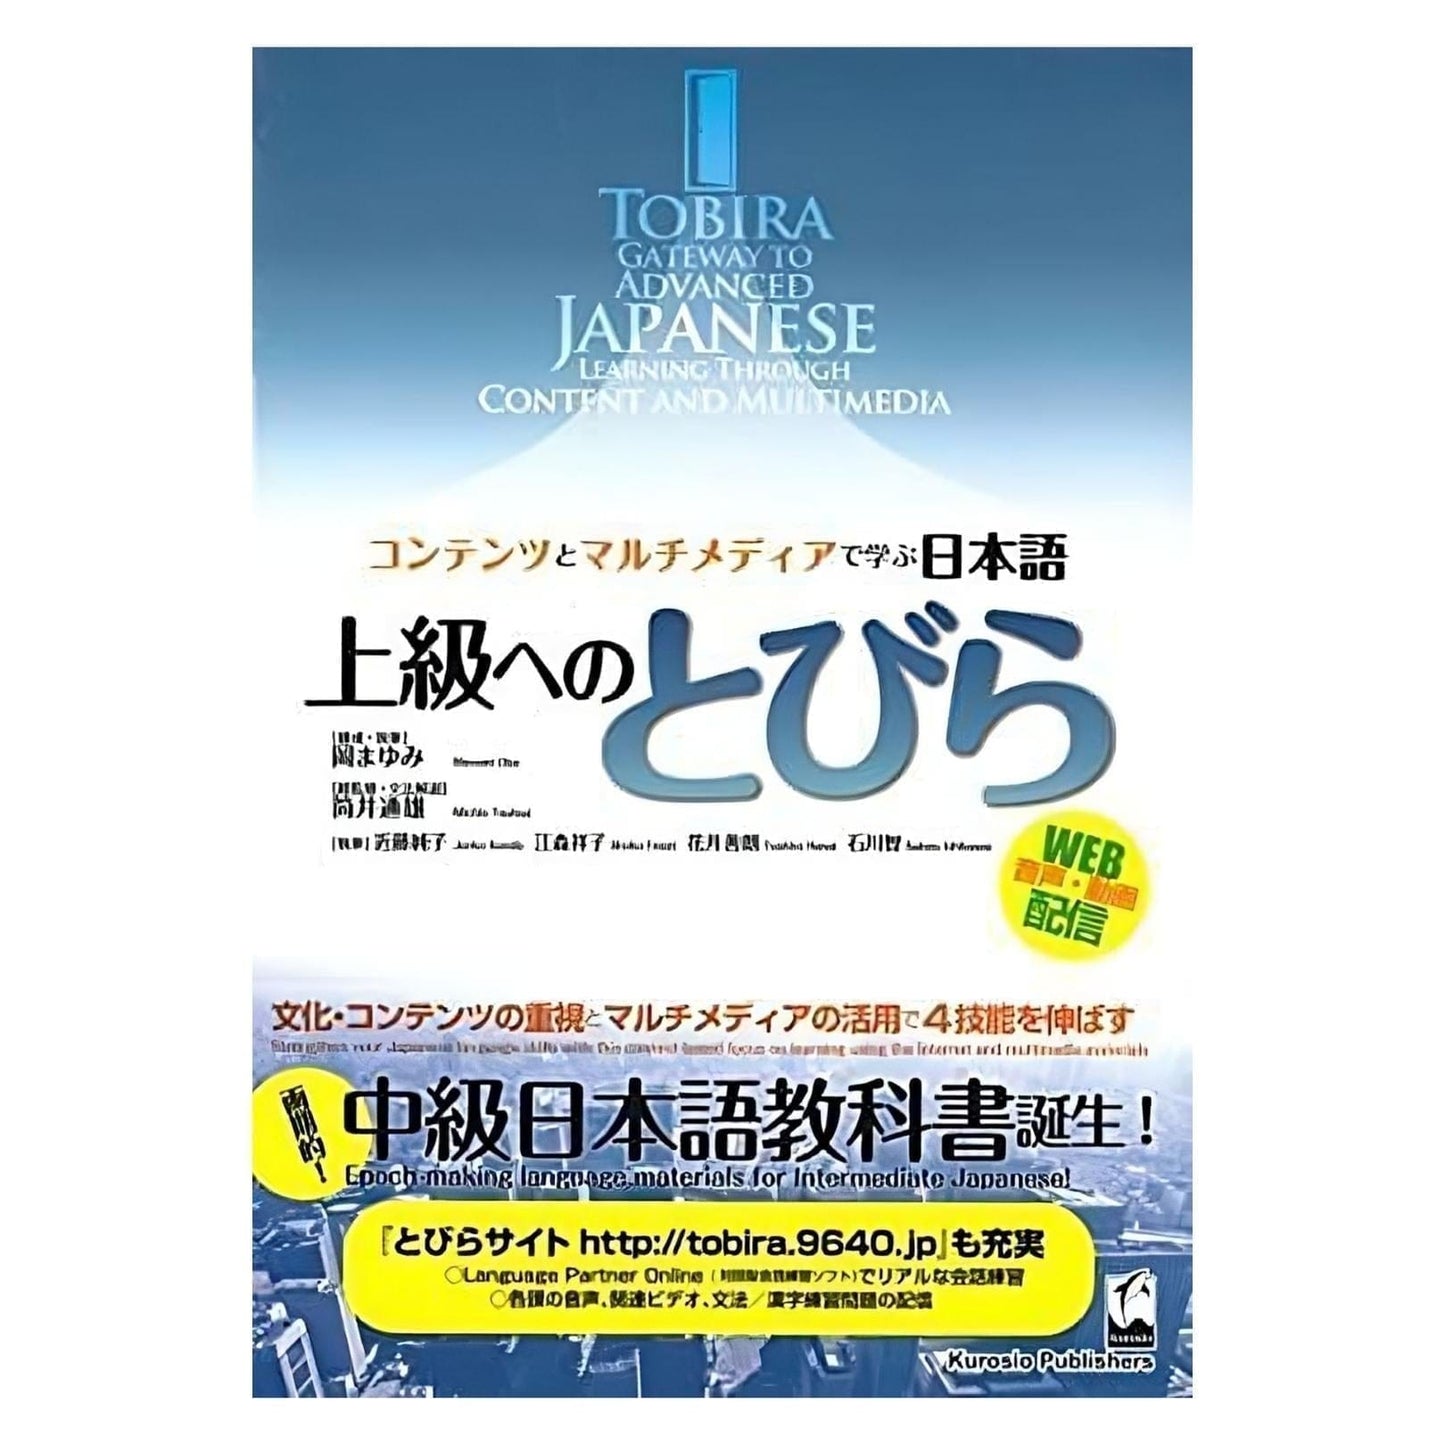 Manual Japonês | Tobira Gateway para Japonês Avançado ChitoroShop